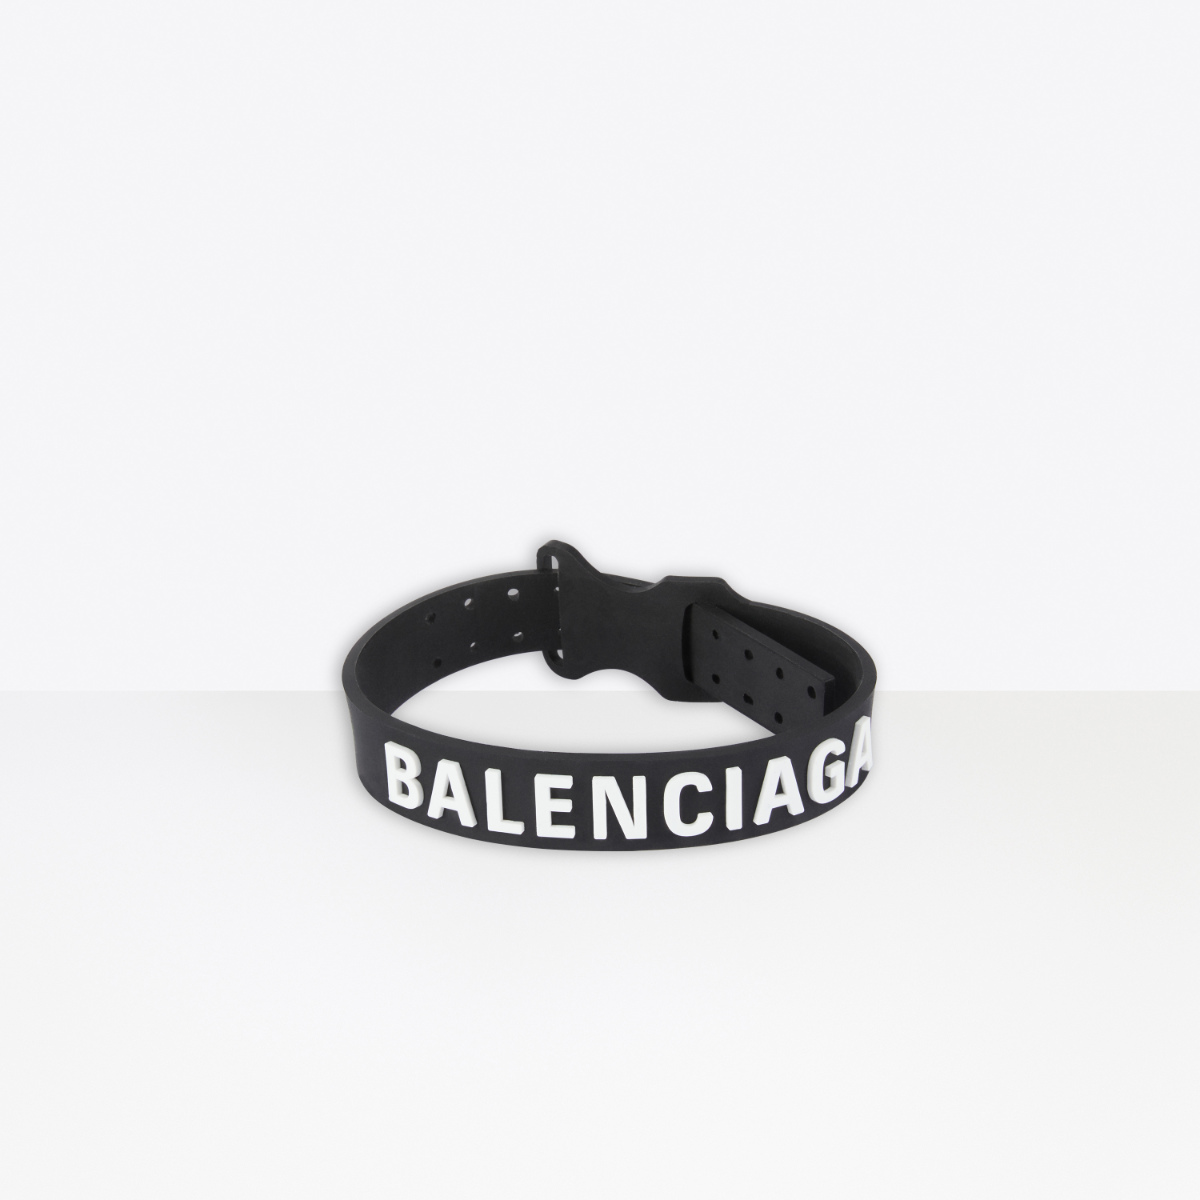 Balenciaga Presents Its Pre-Collection, Summer 21 - Accessories